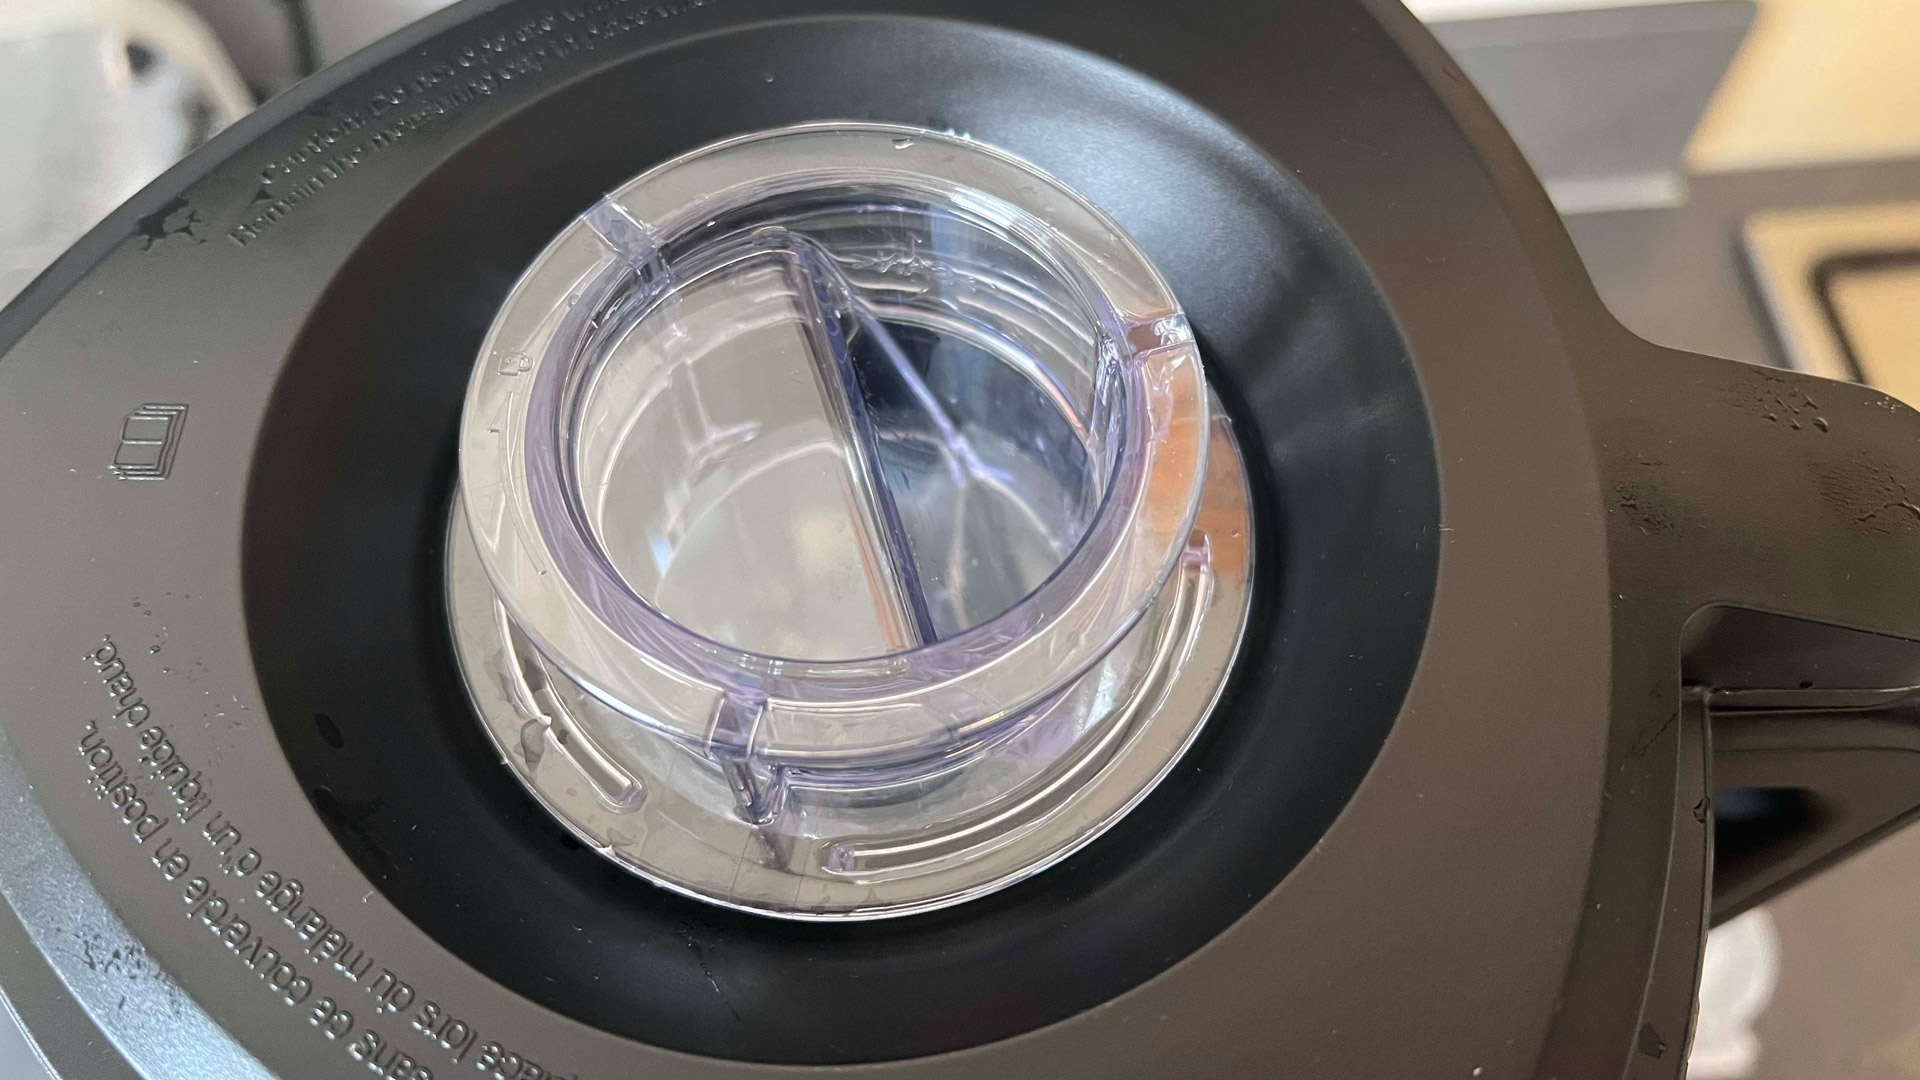 Circular cap on the Braun TriForce Power Blender's lid